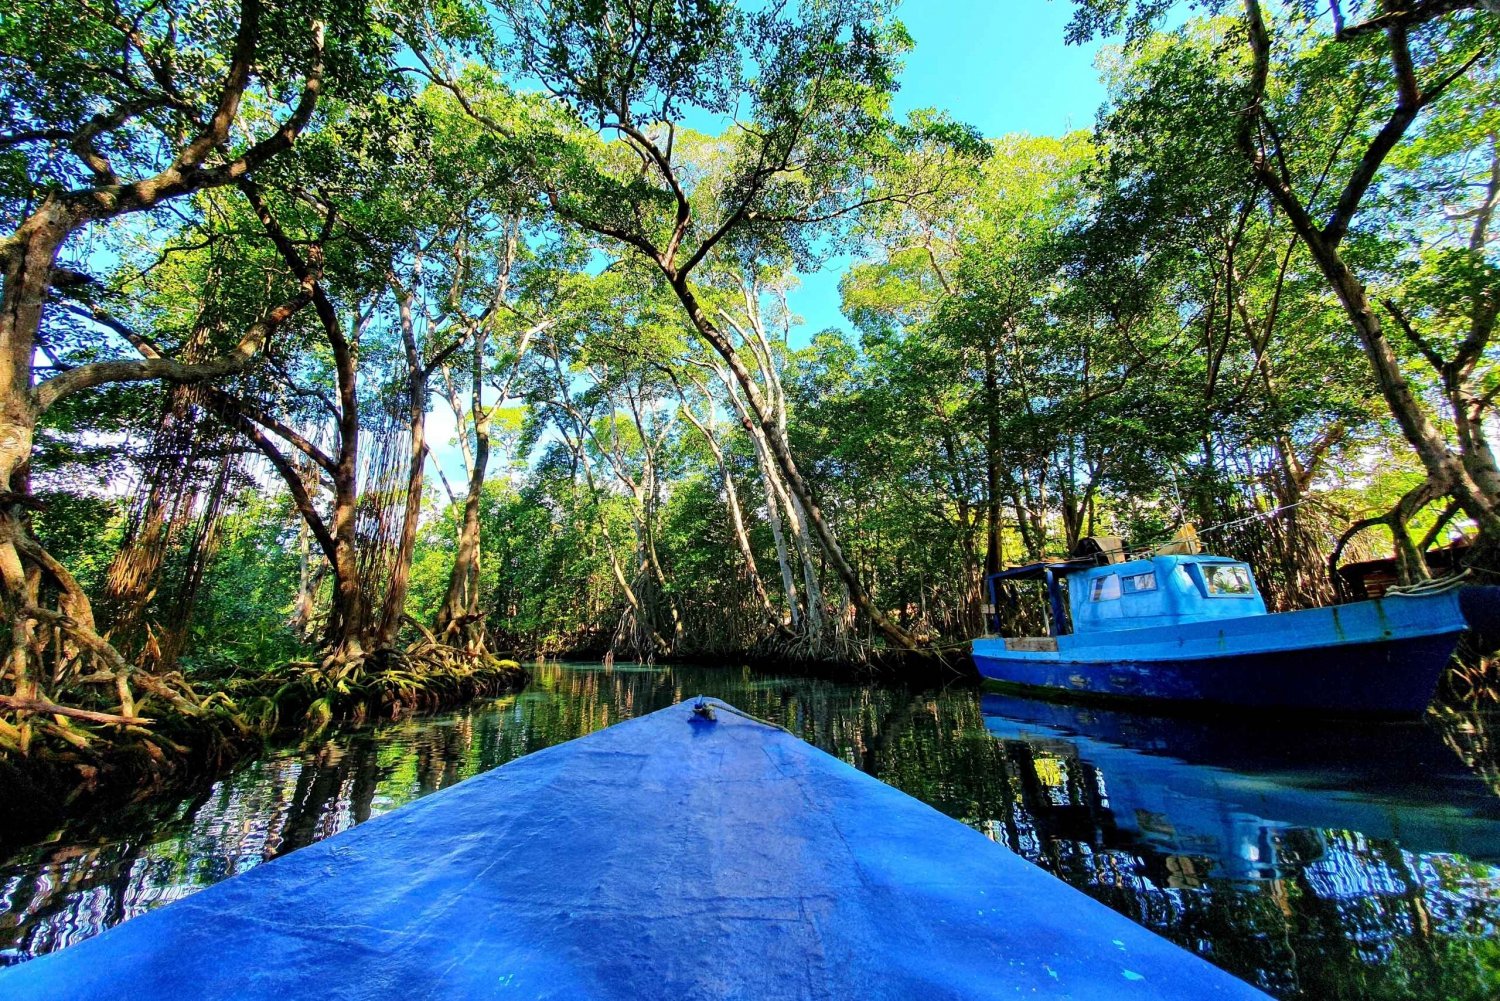 Private tour: Dudu cenotes + Playa Grande Beach + much more